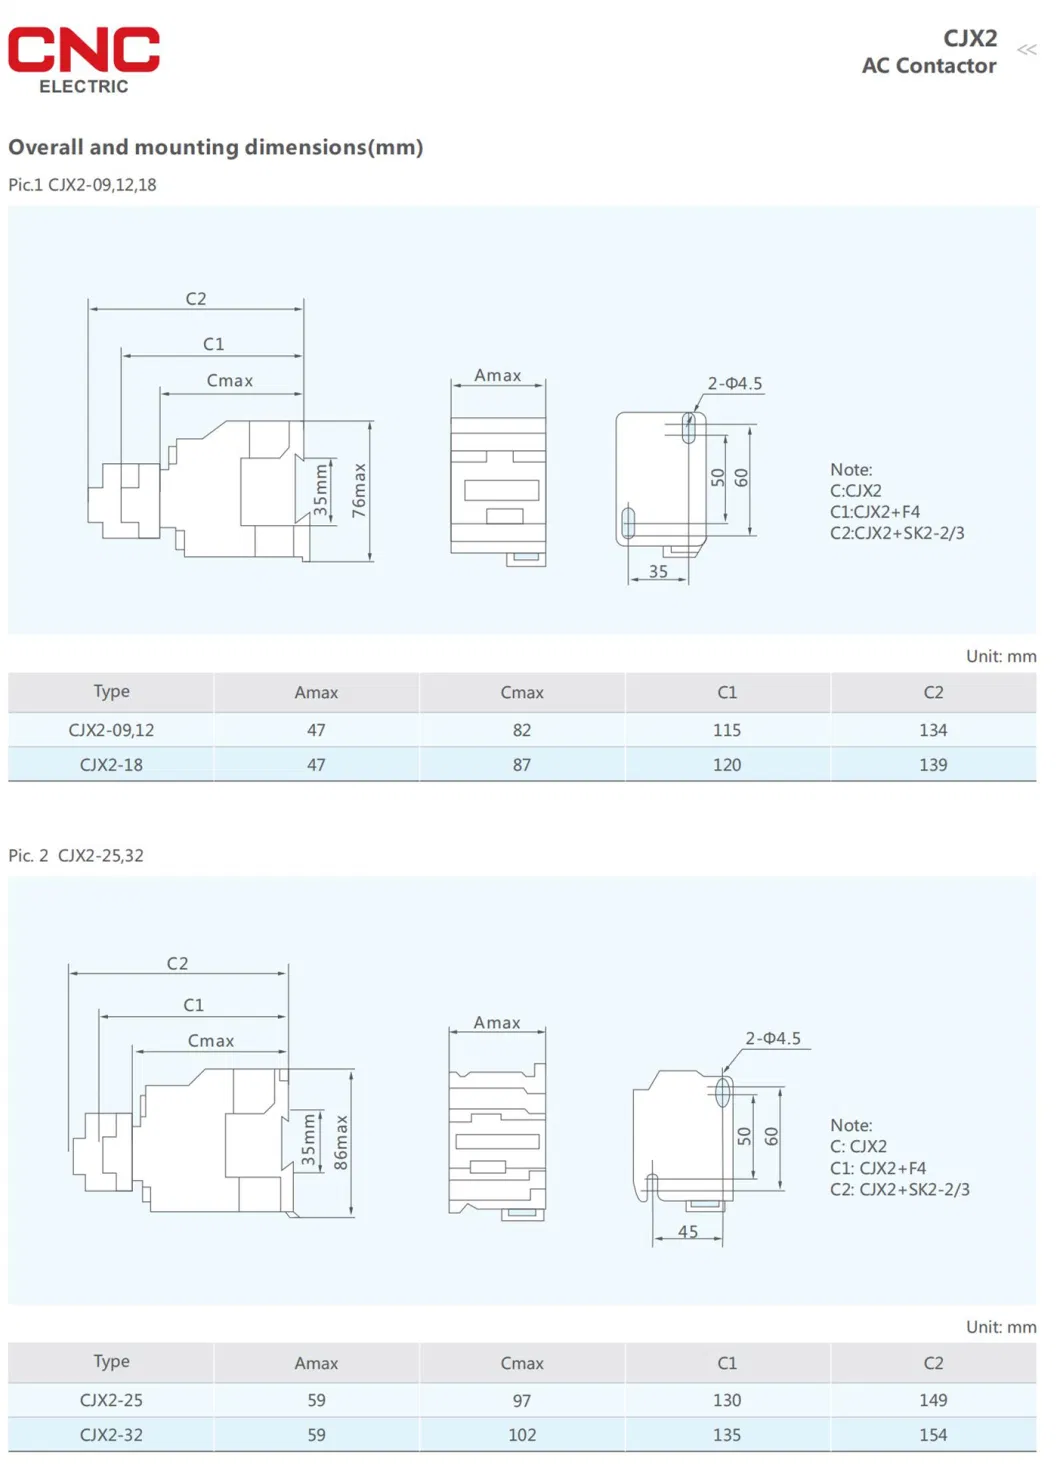 CNC 2021 Custom Wholesale 25A C AC Contactor 25A AC Magnetic Contactor 25A AC Contactors 3 Phase